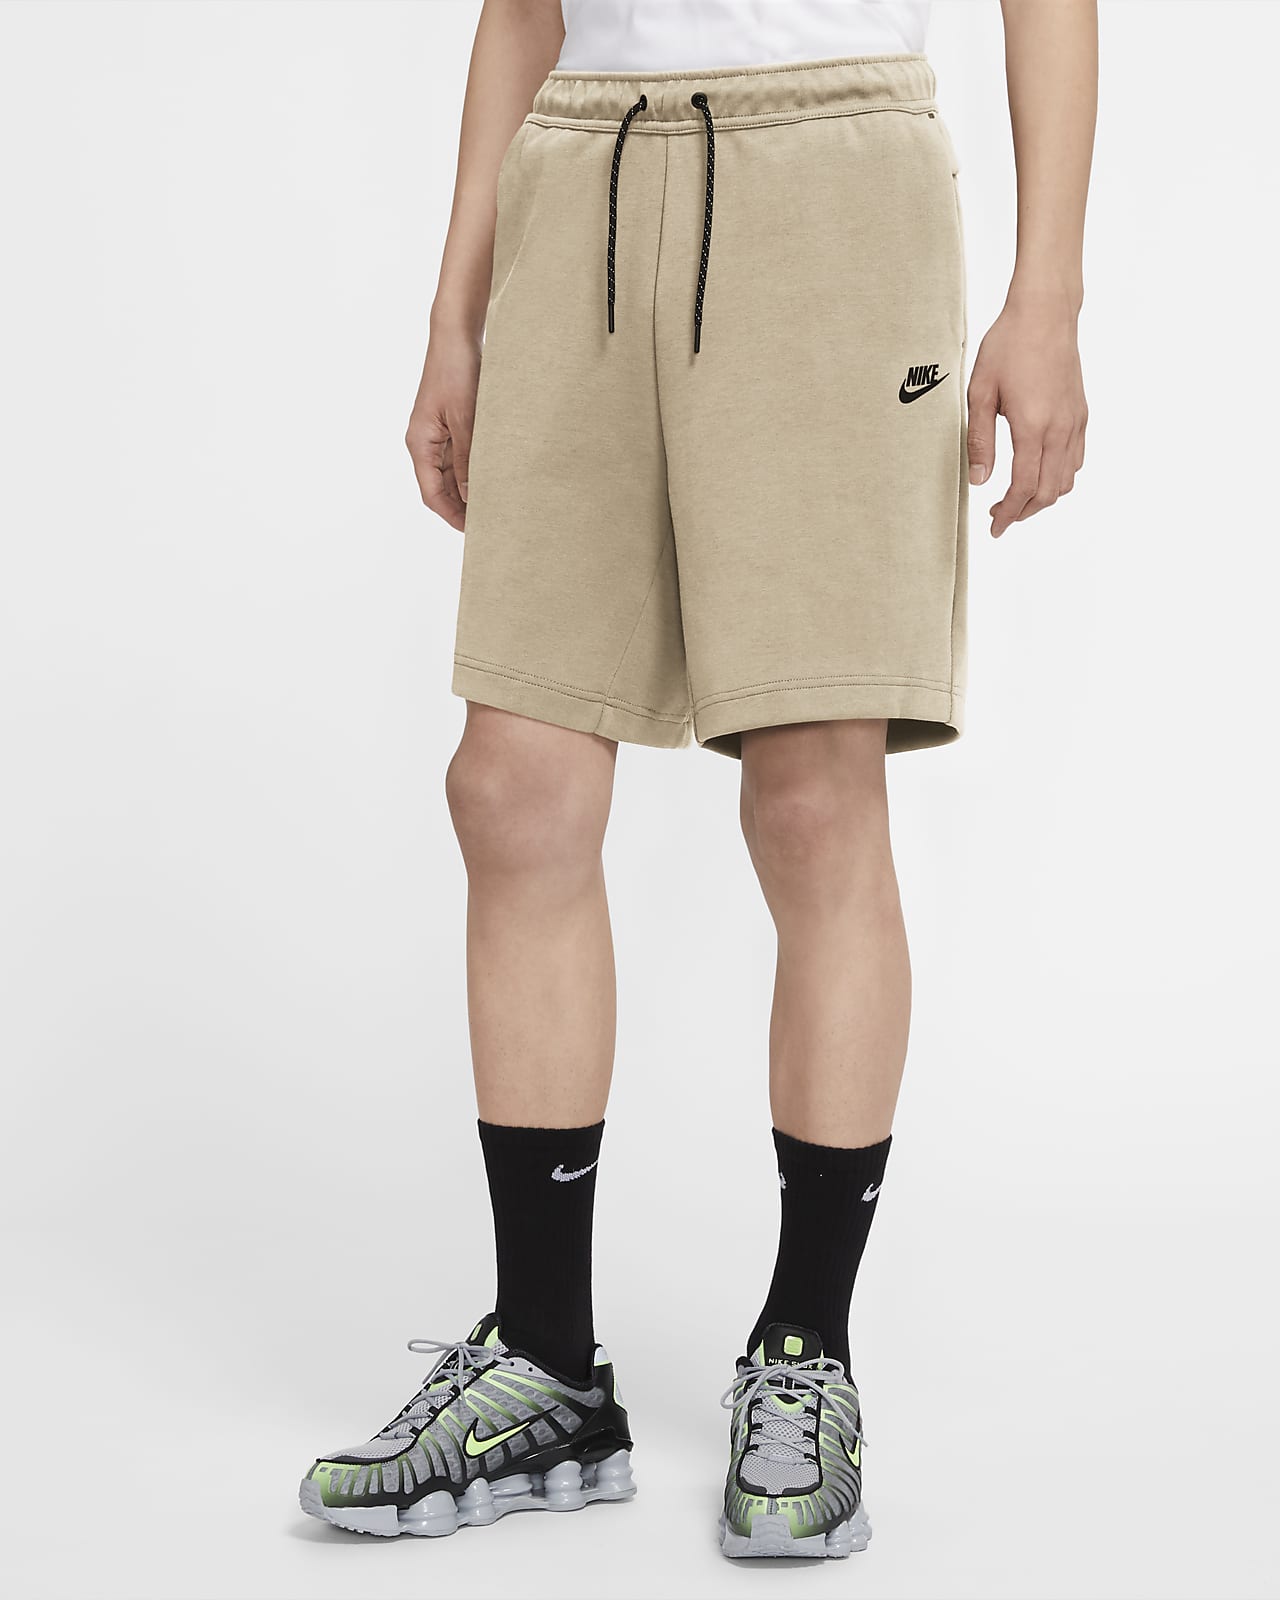 nike tech fleece shorts australia